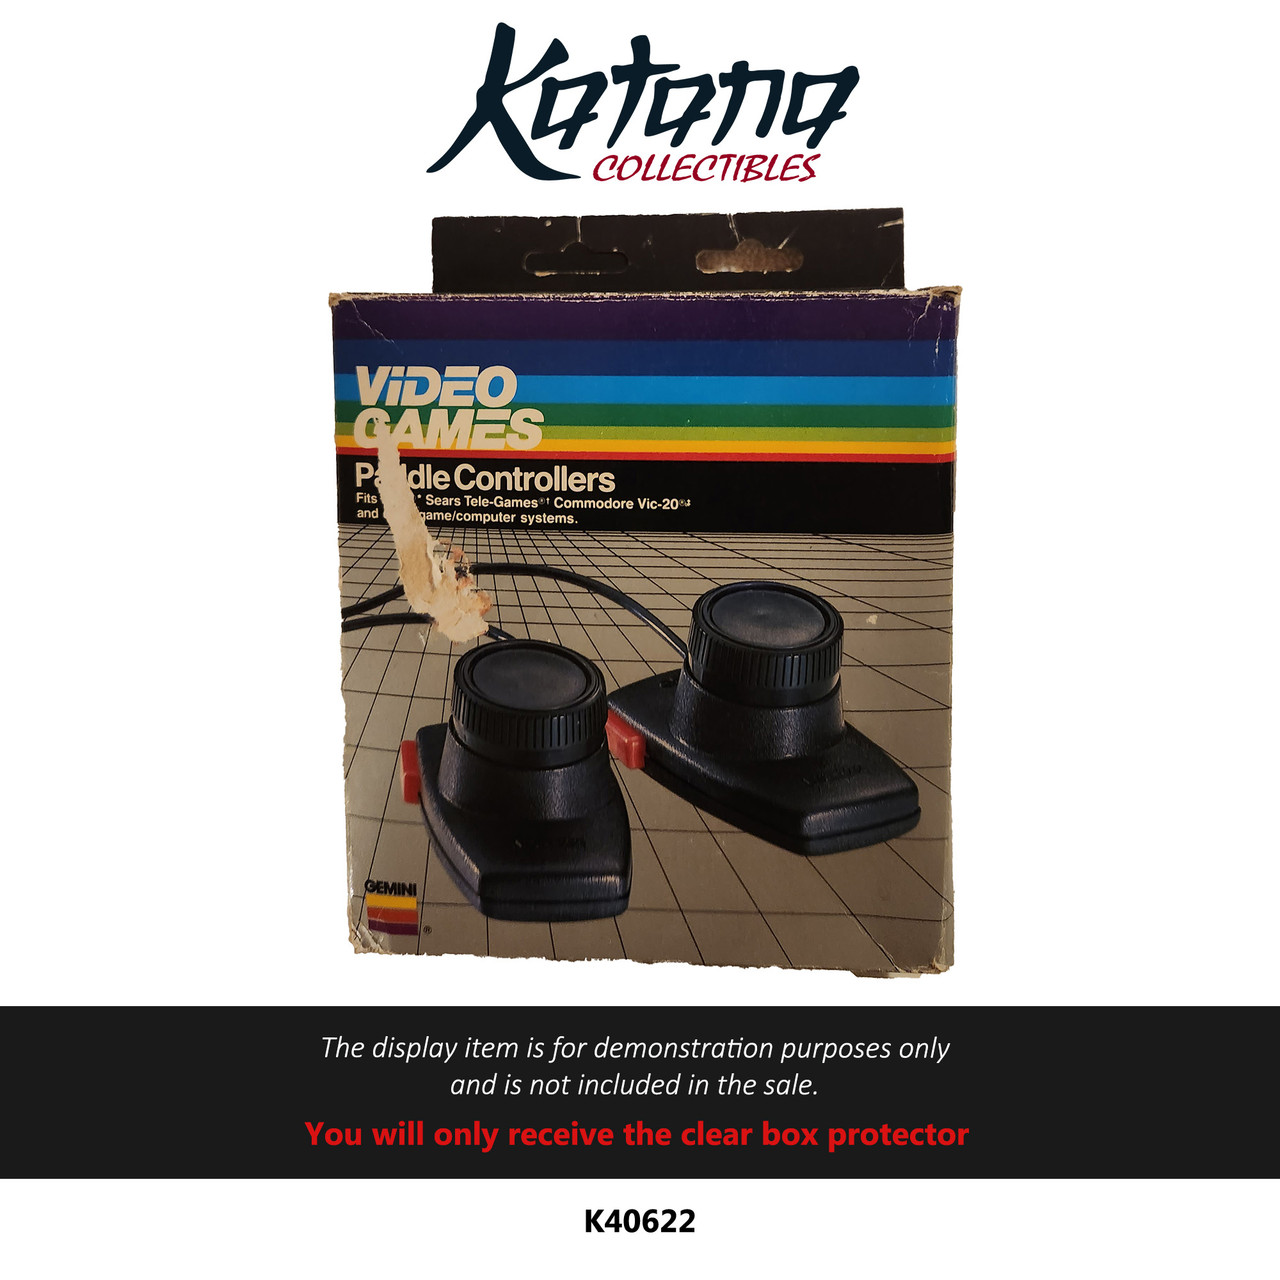 Katana Collectibles Protector For Vg172 Gemini Paddle Controllers Atari 2600